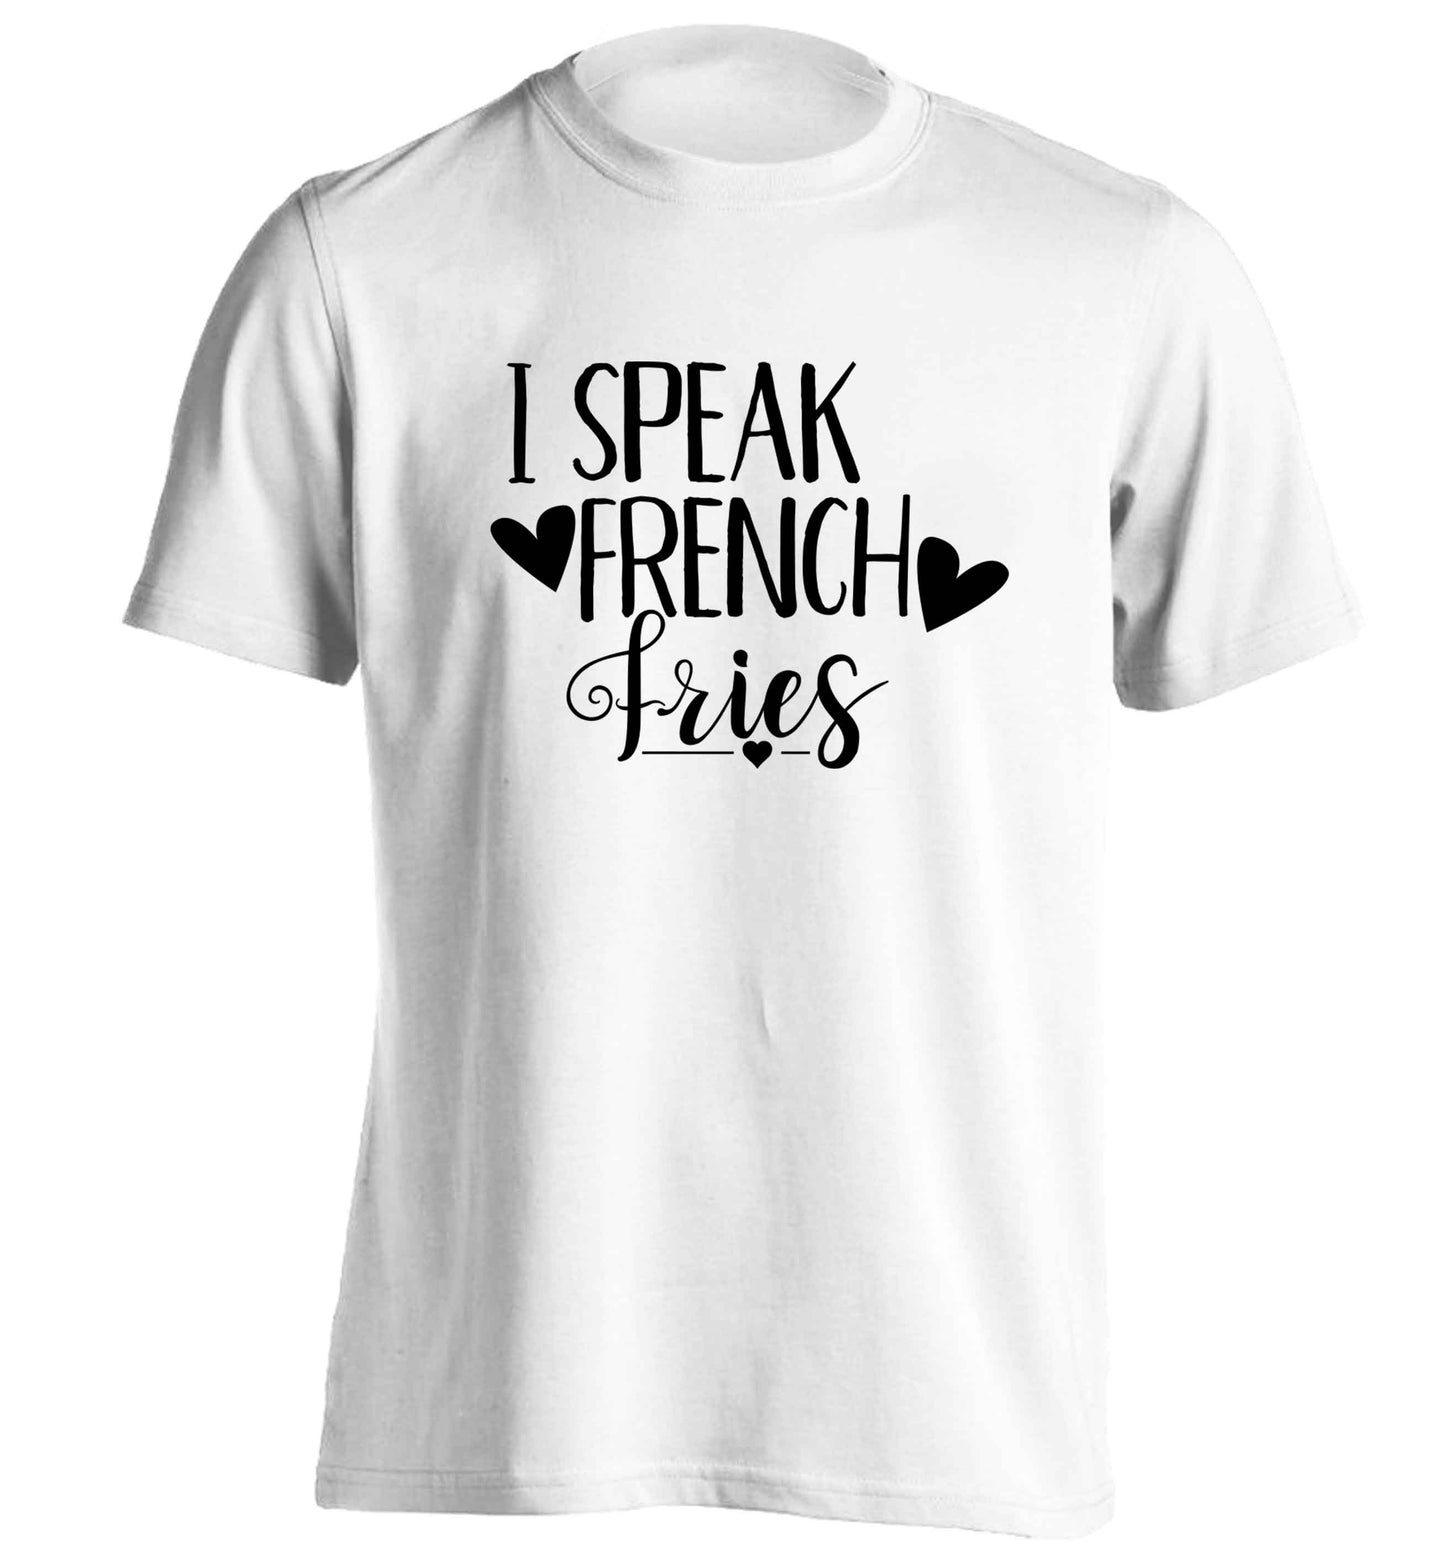 I speak French fries adults unisex white Tshirt 2XL